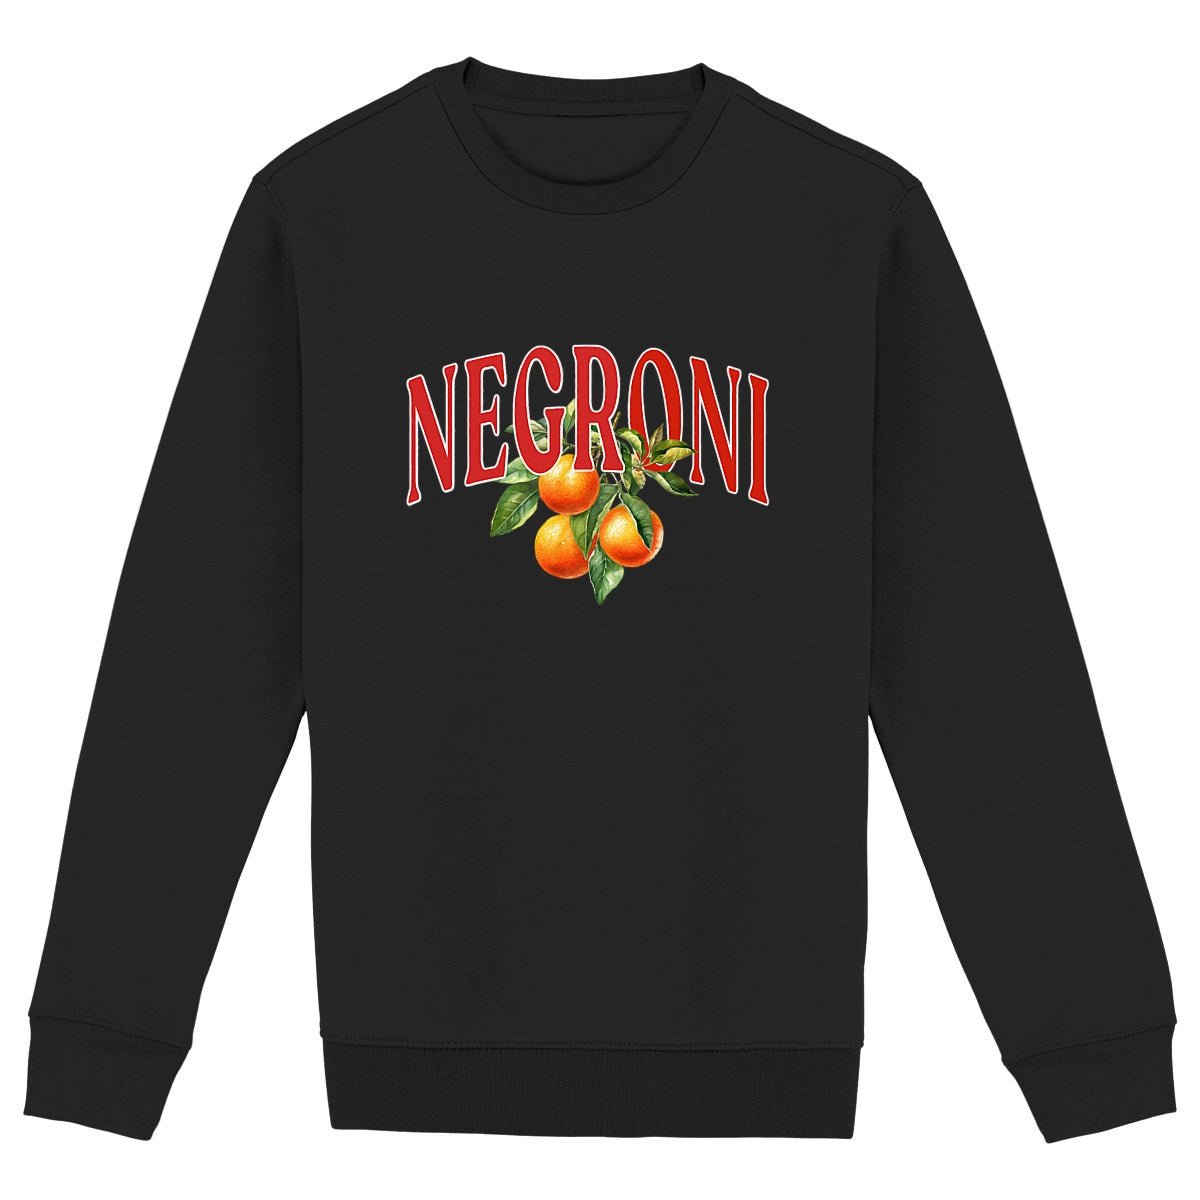 Negroni Life - Organic Sweatshirt - The Refined Spirit